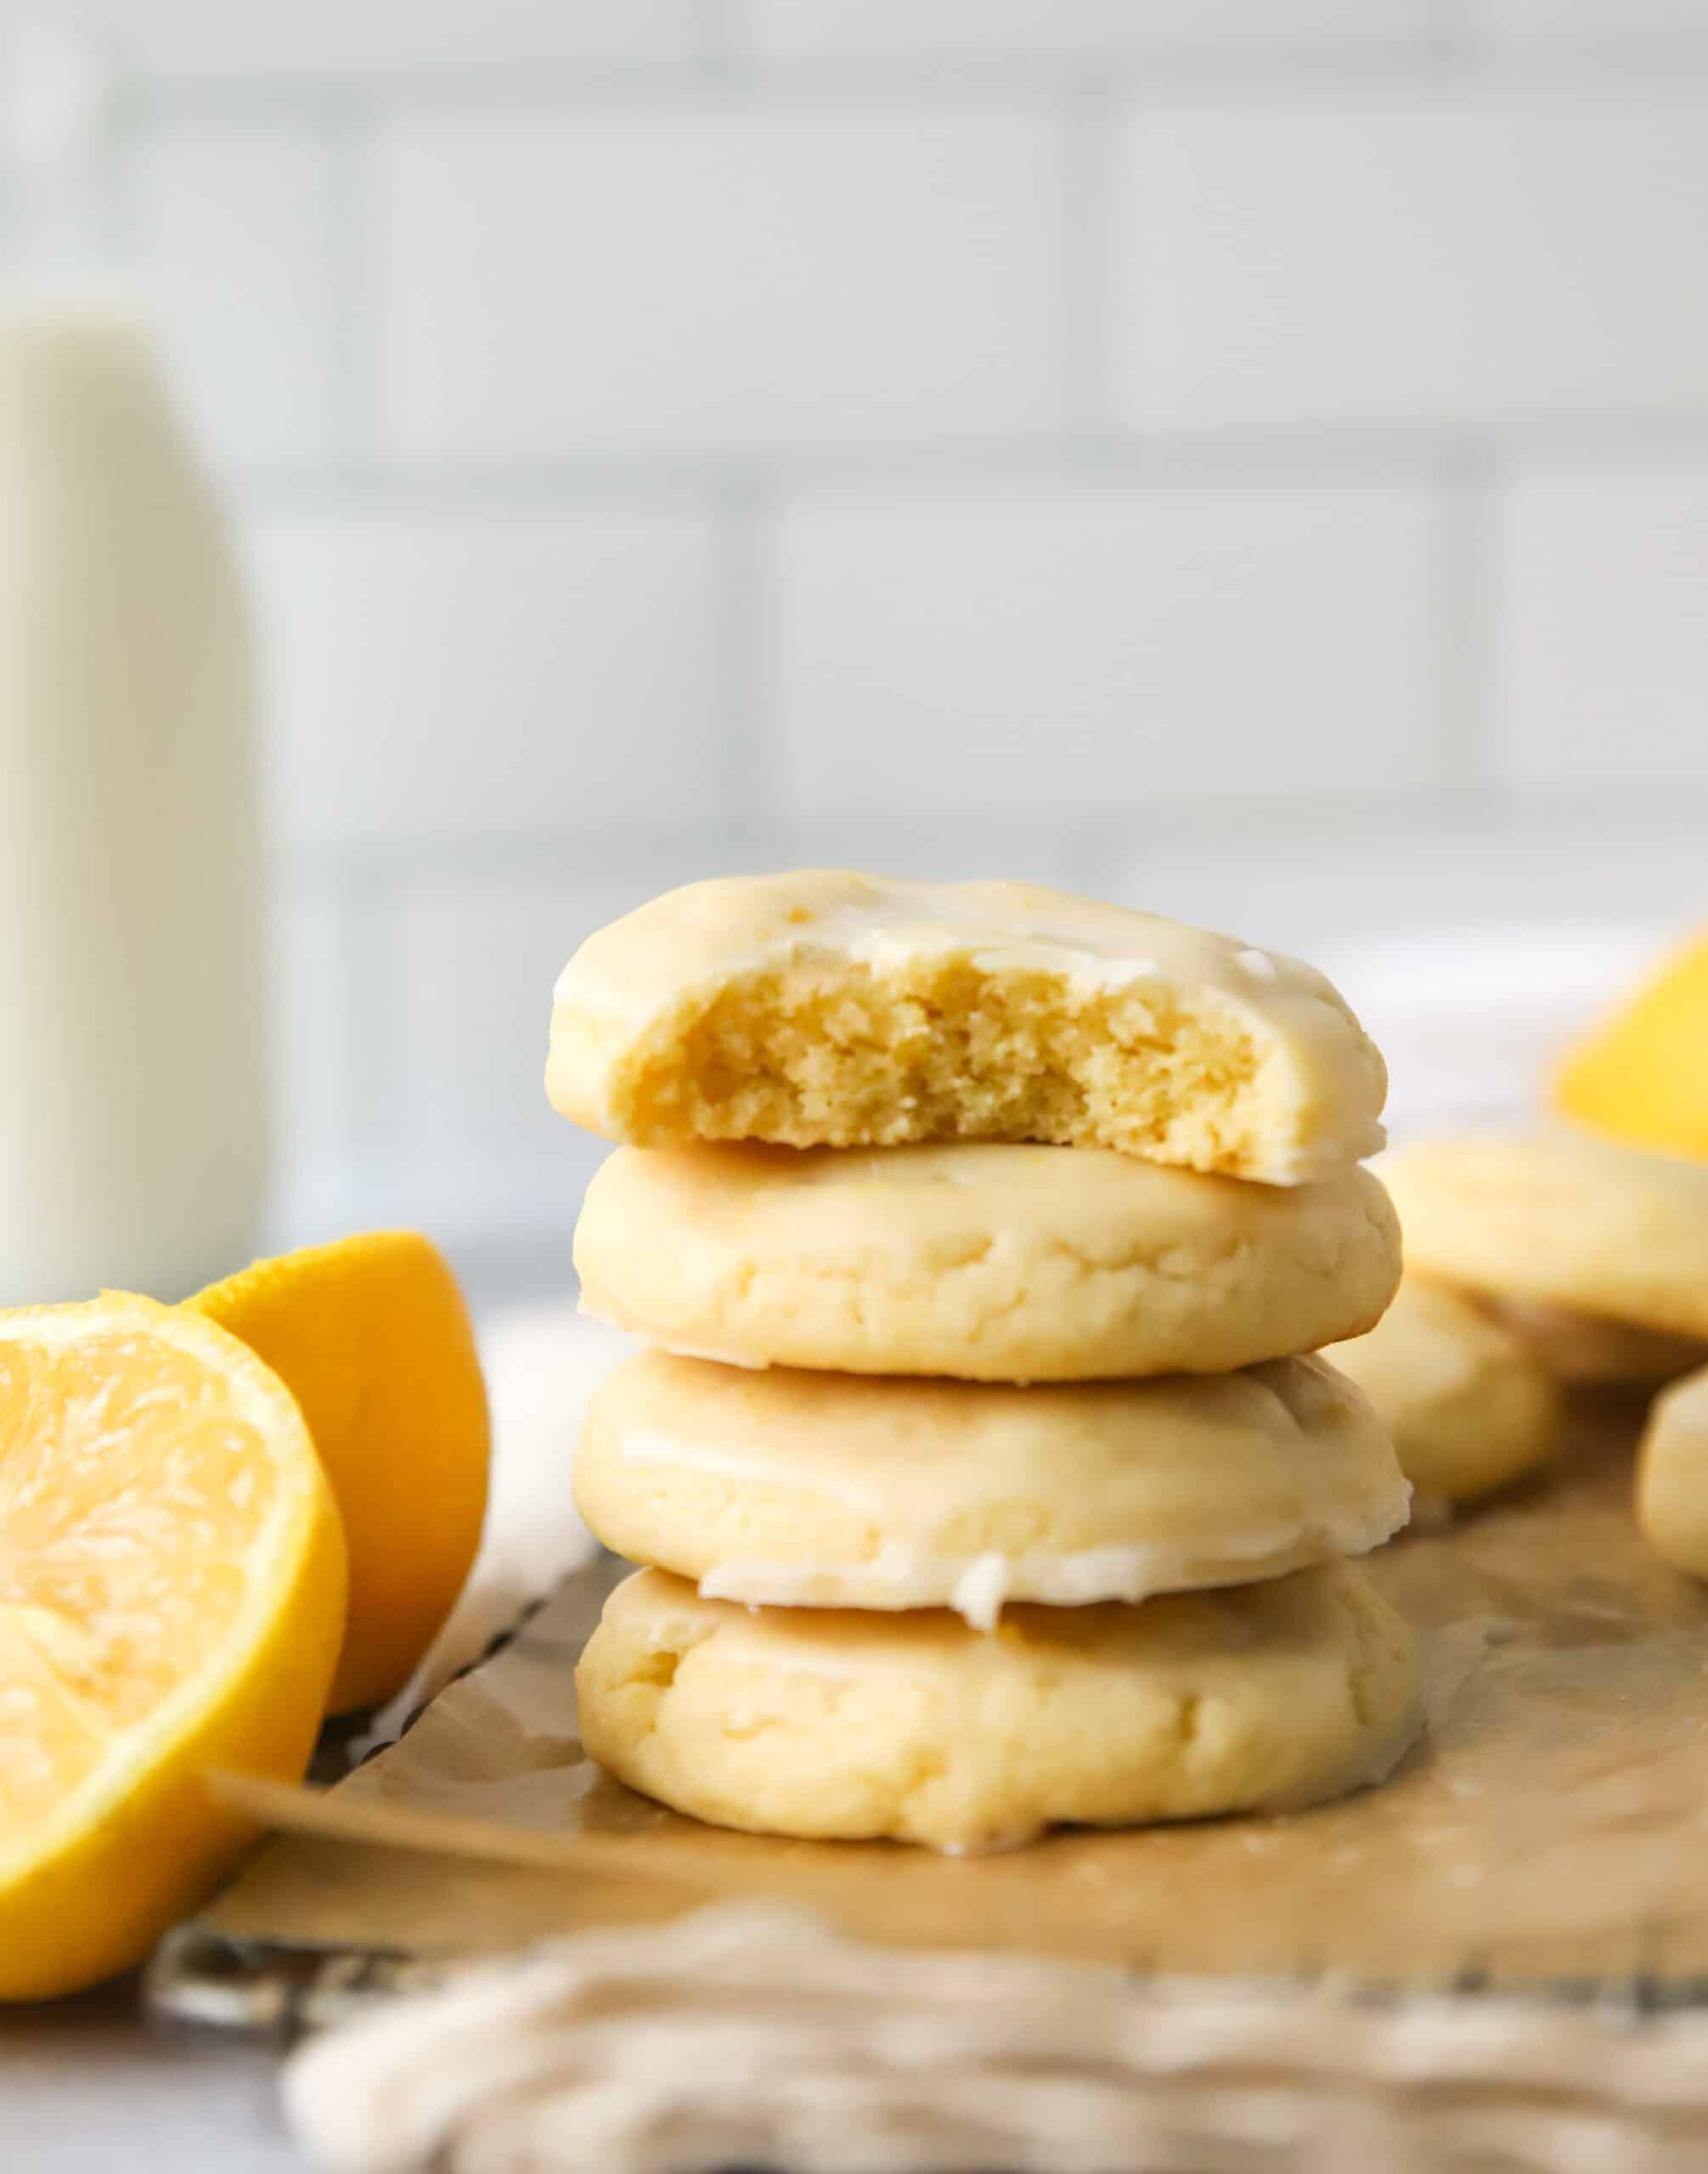 25 Super Fun Baking Recipes - Love and Lemons